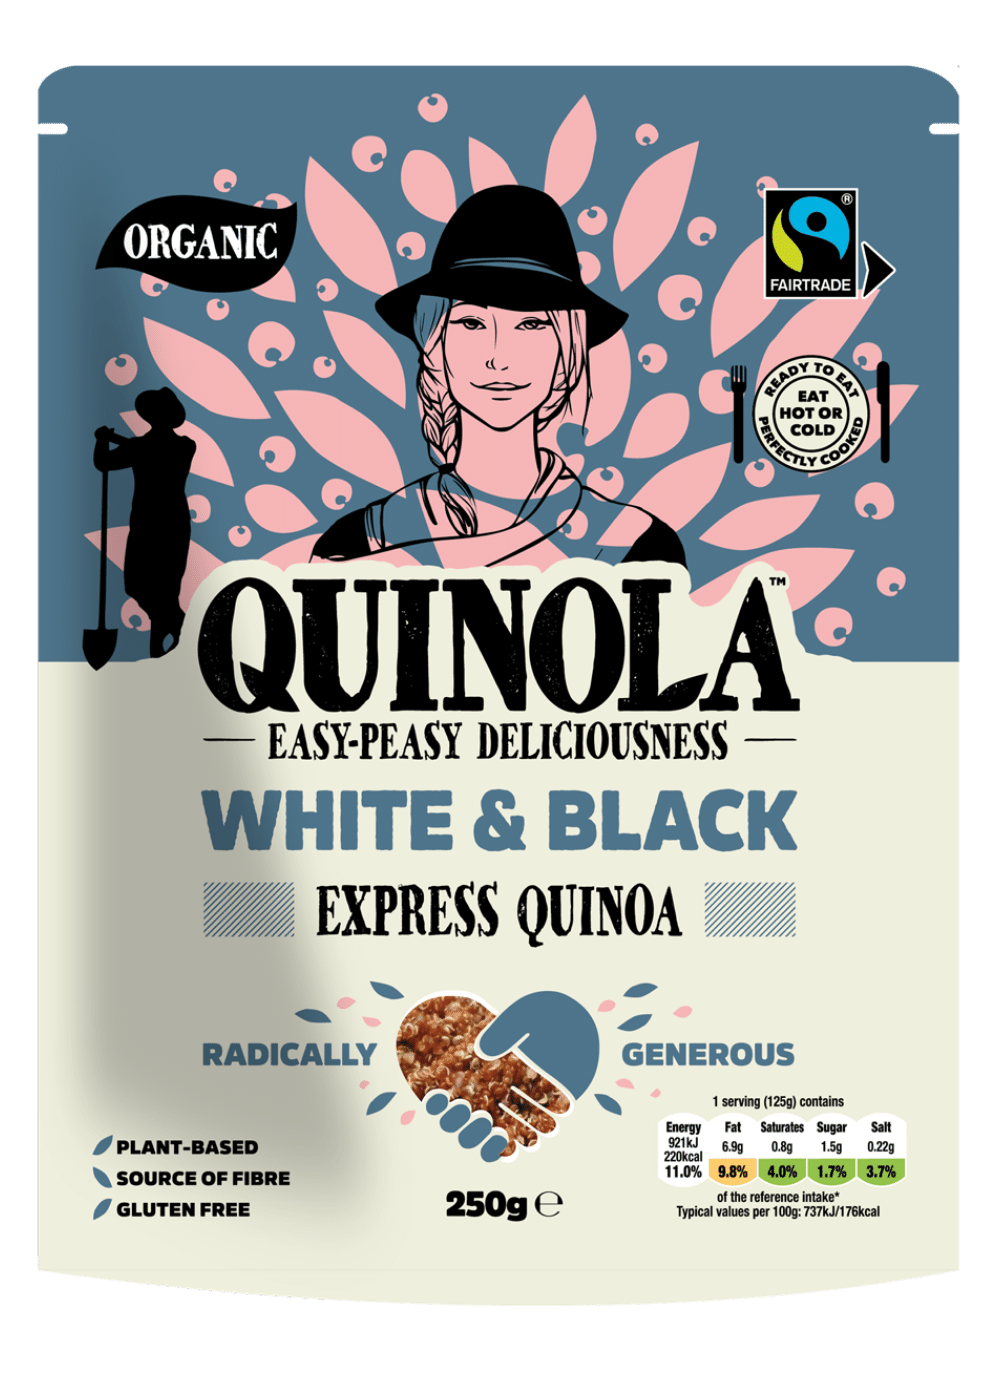 White and black ready to eat quinoa